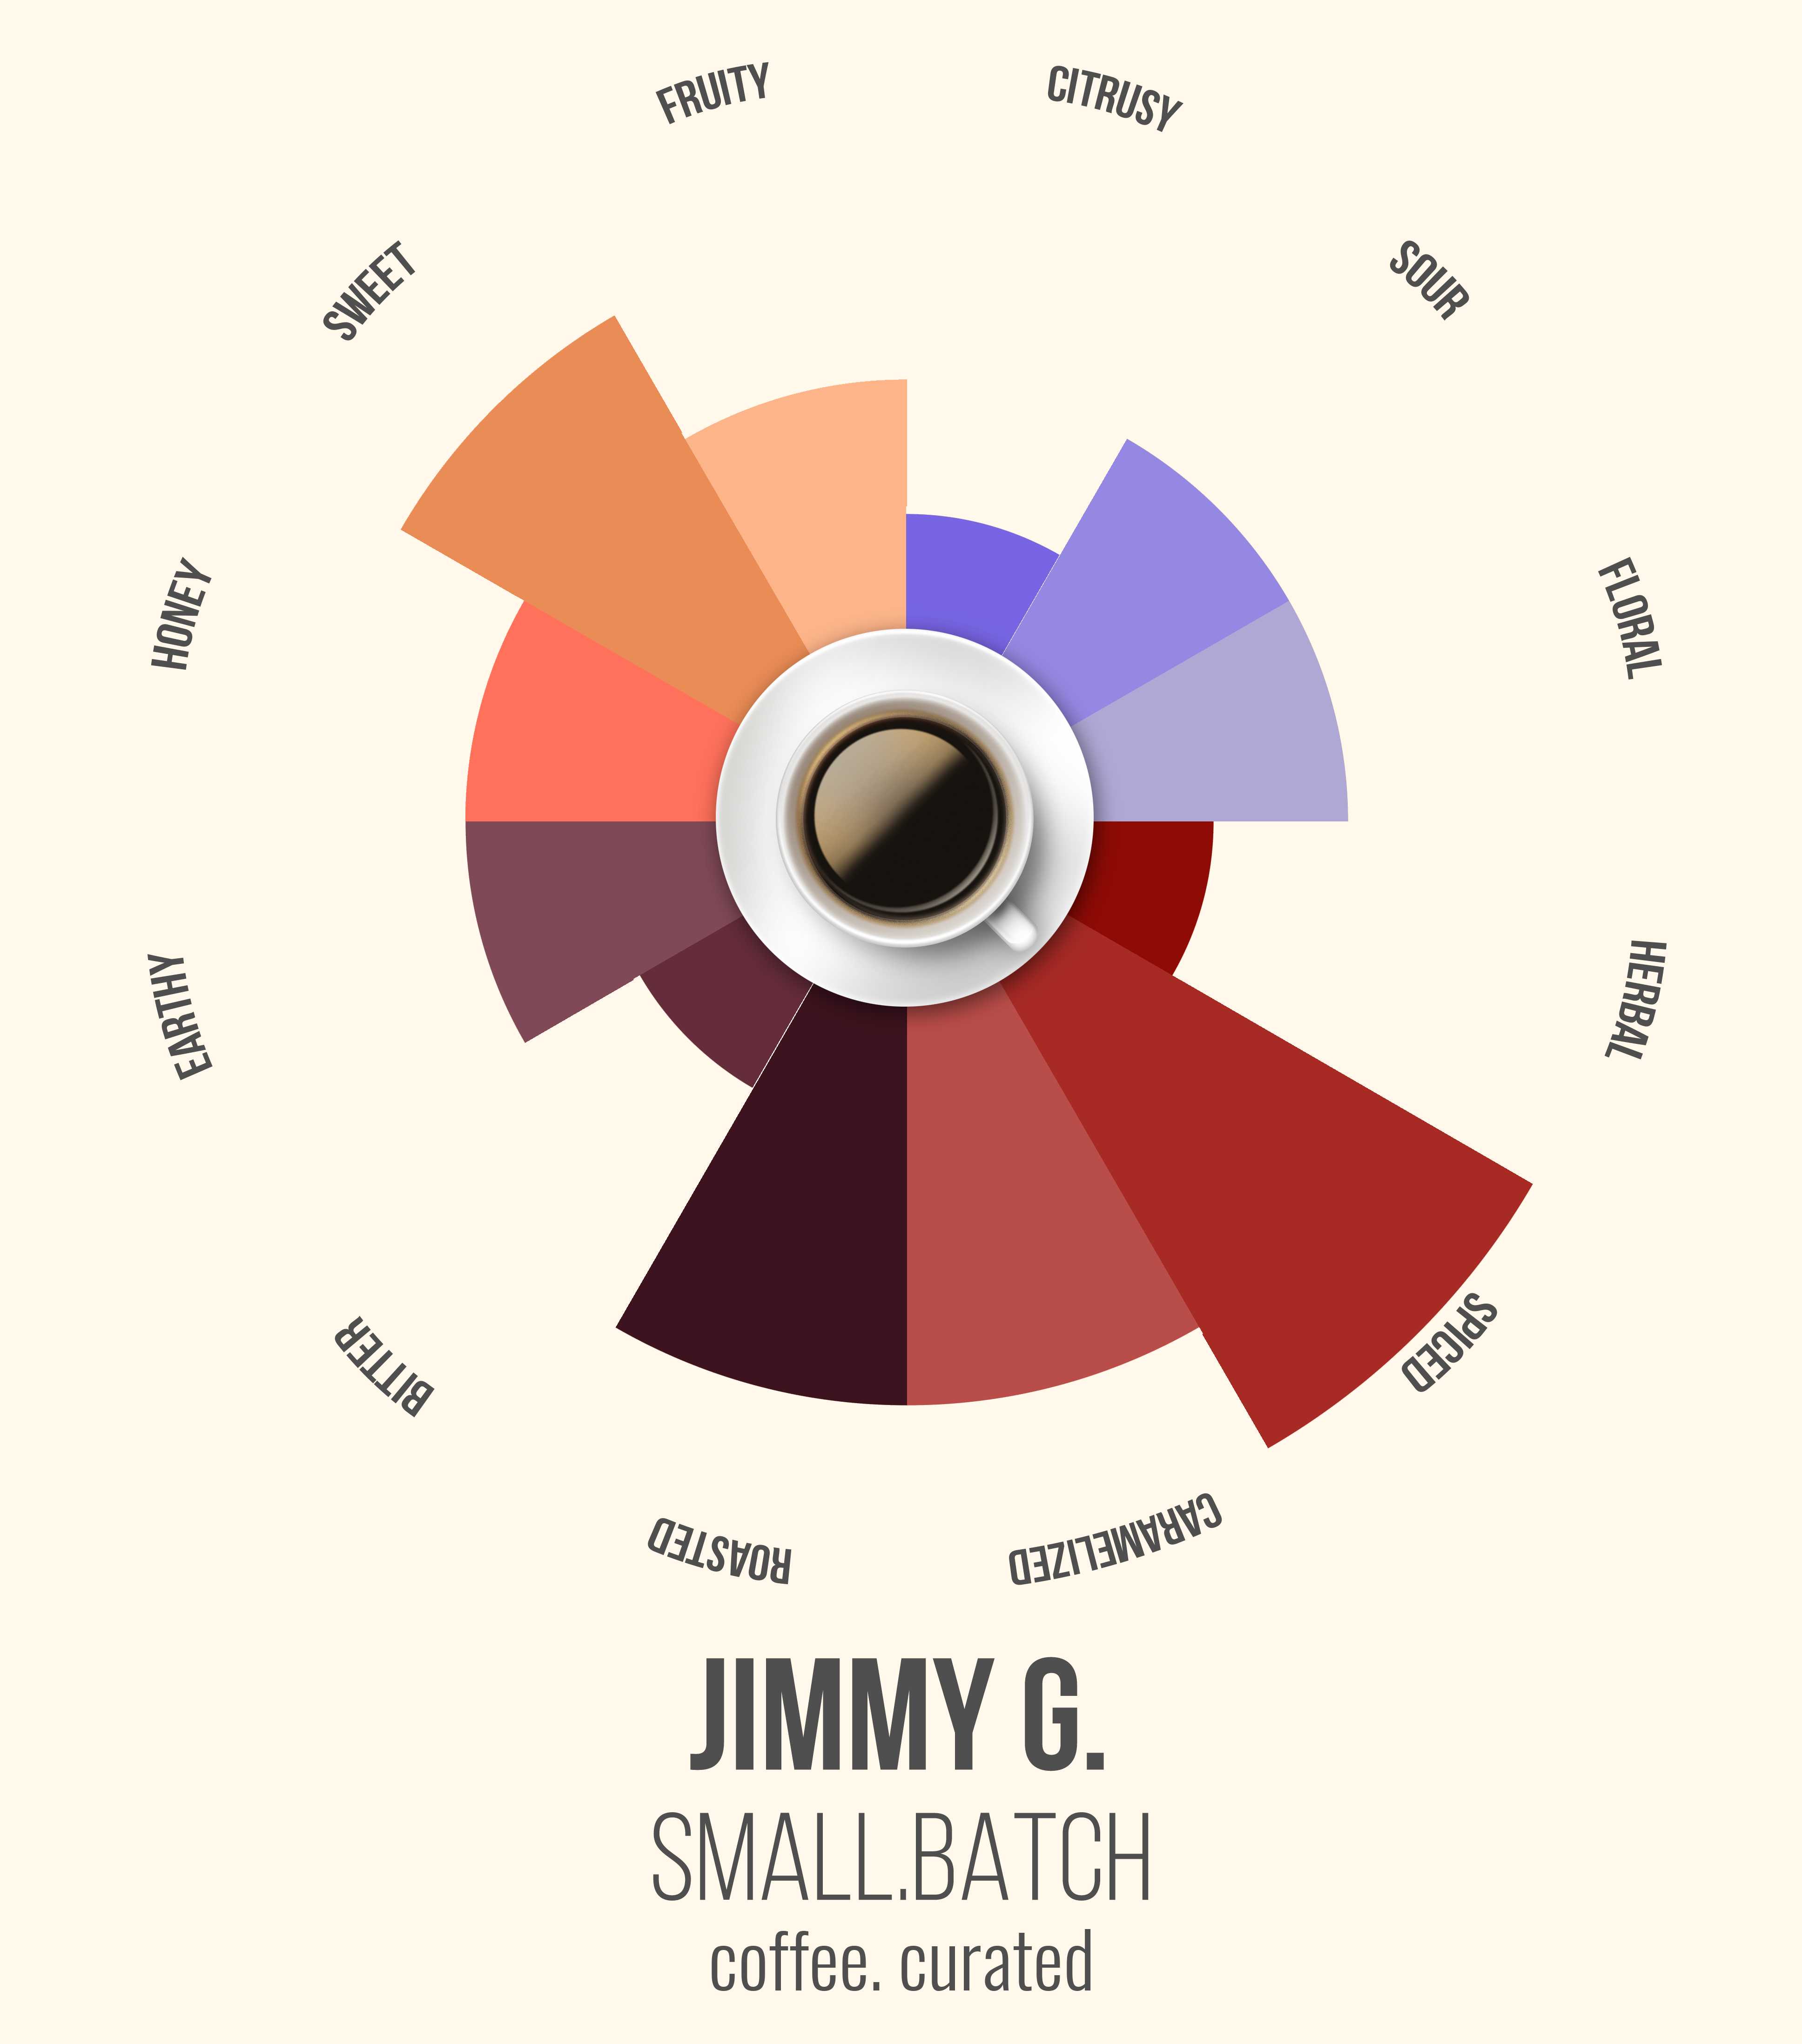 Small Batch Coffee JIMMY G